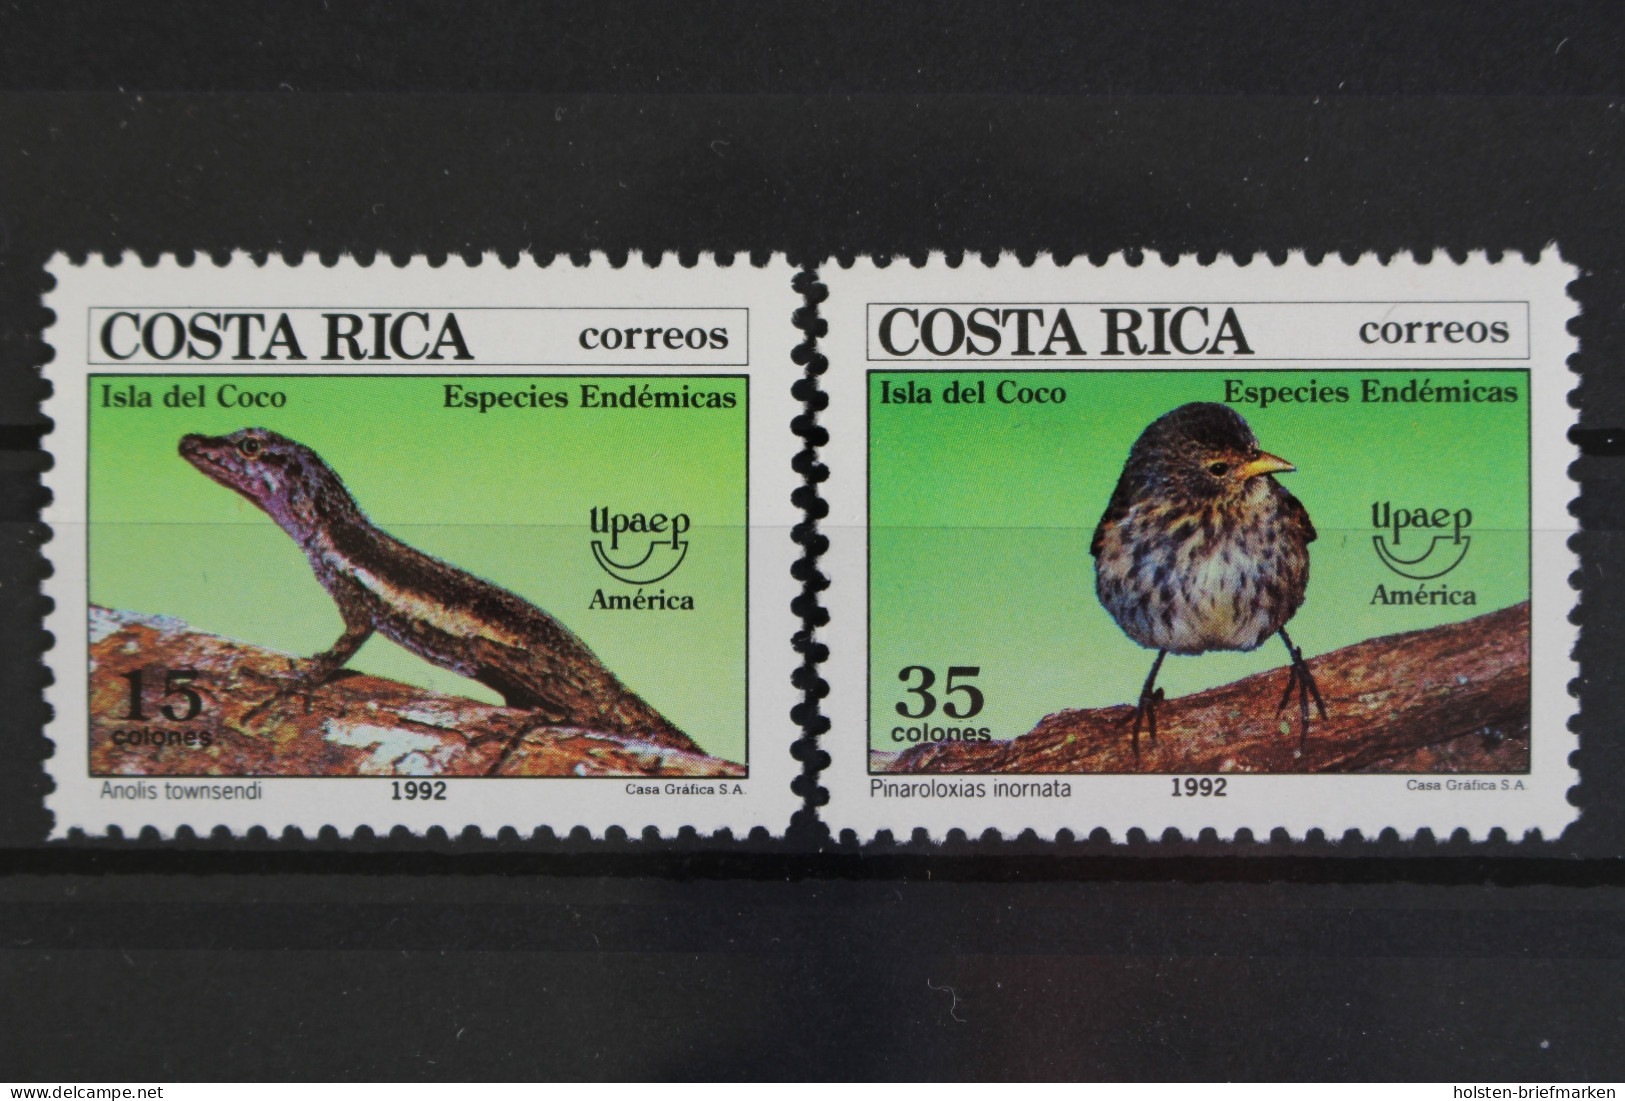 Costa Rica, MiNr. 1412-1413, Postfrisch - Costa Rica